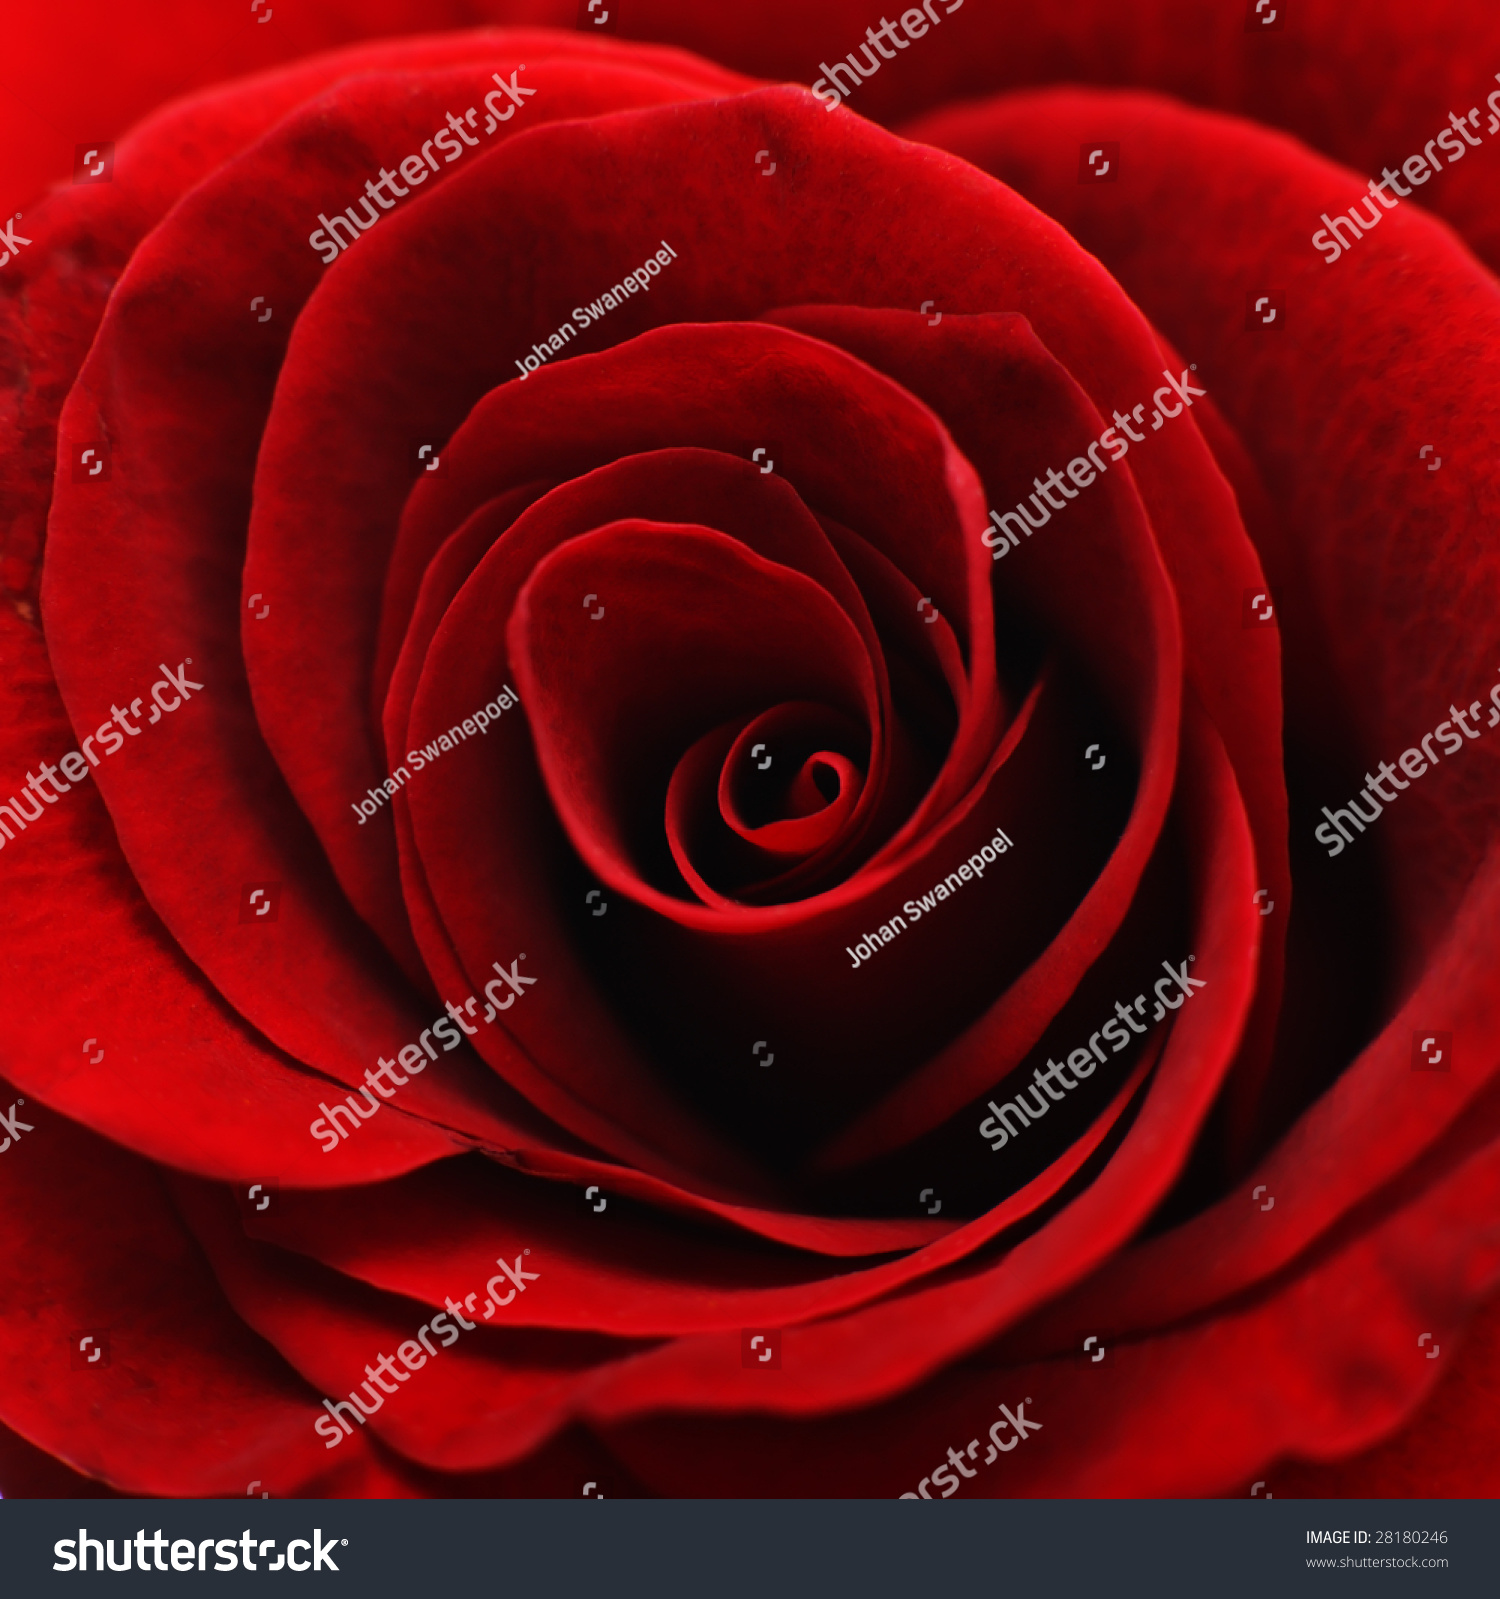 Closeup Inside Red Rose Stock Photo 28180246 - Shutterstock